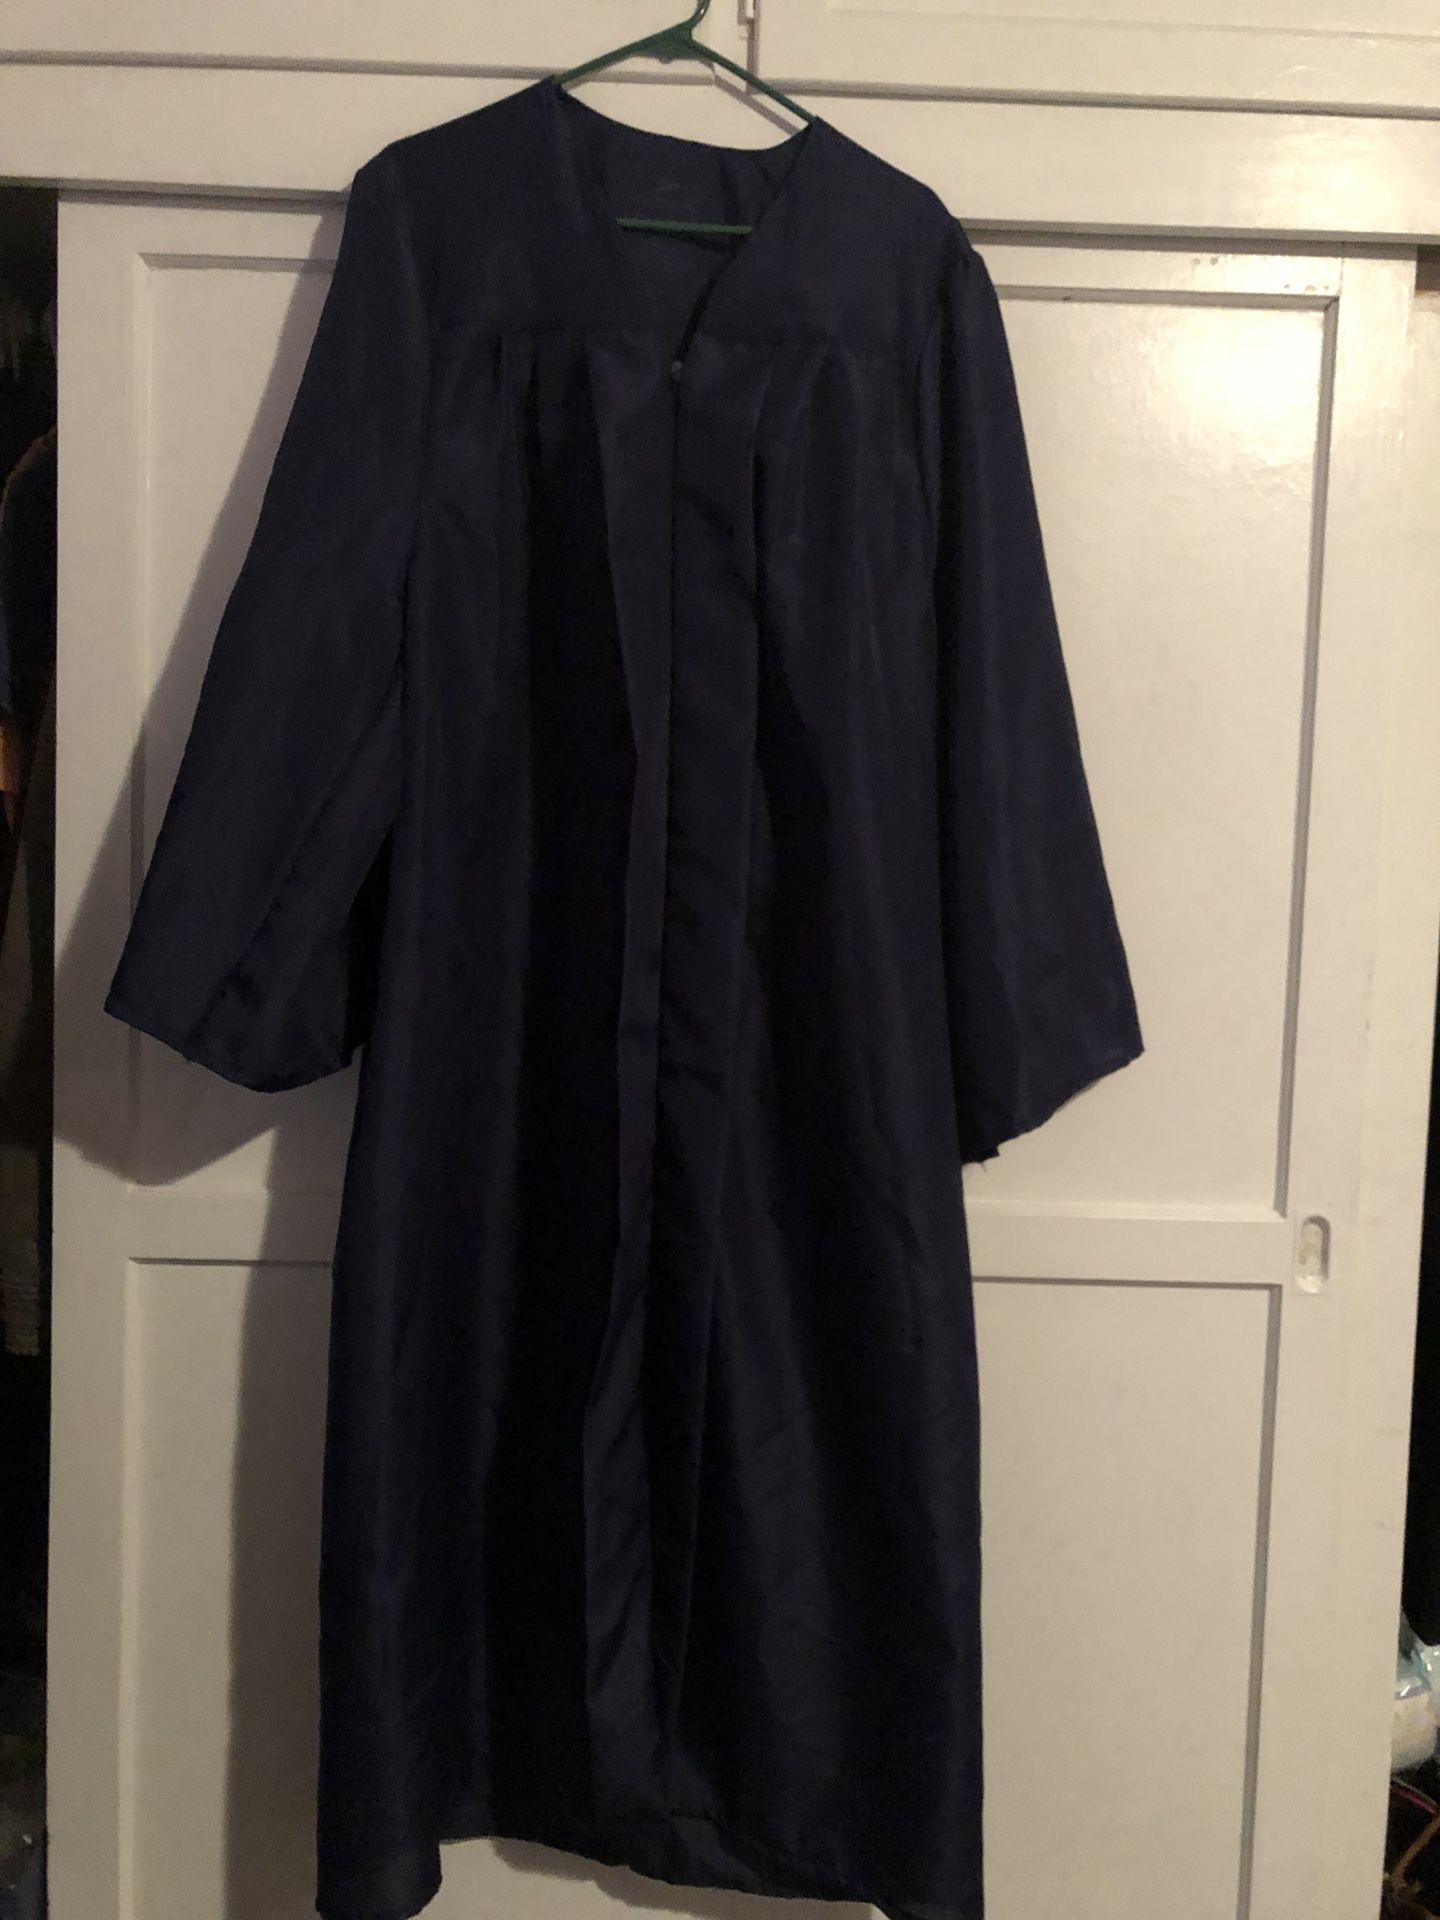 Graduation gown navy blue. Size 5’10-6’0